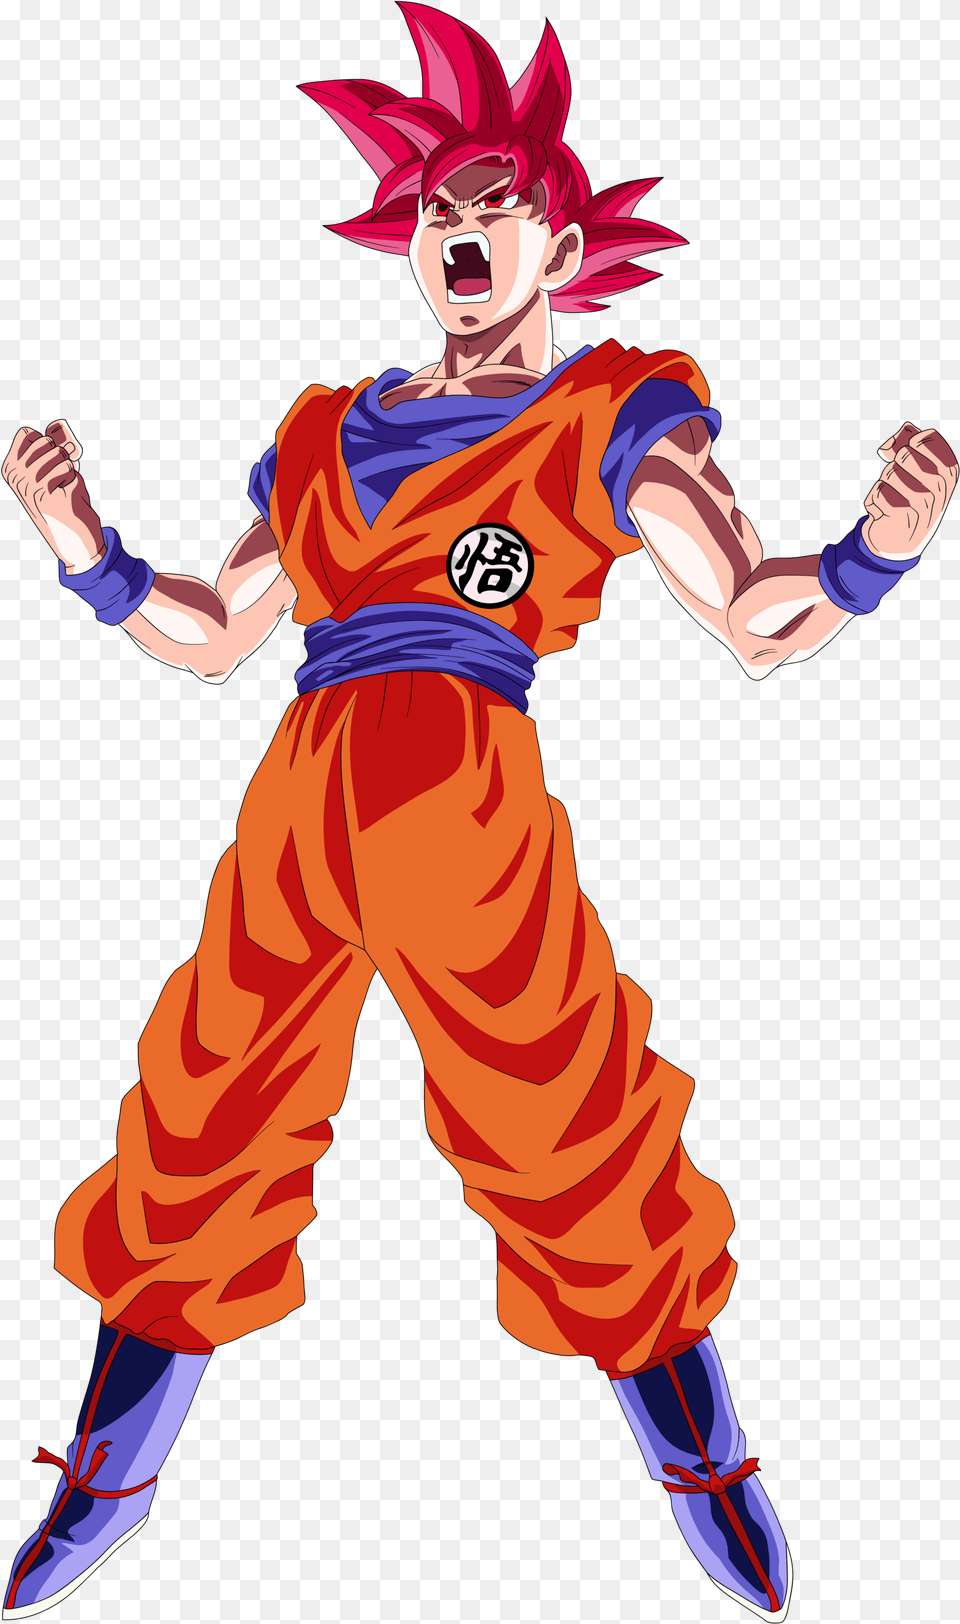 Goku Super Saiyan God Red Drawing Super Saiyan God Goku Power Up, Book, Person, Costume, Comics Png Image